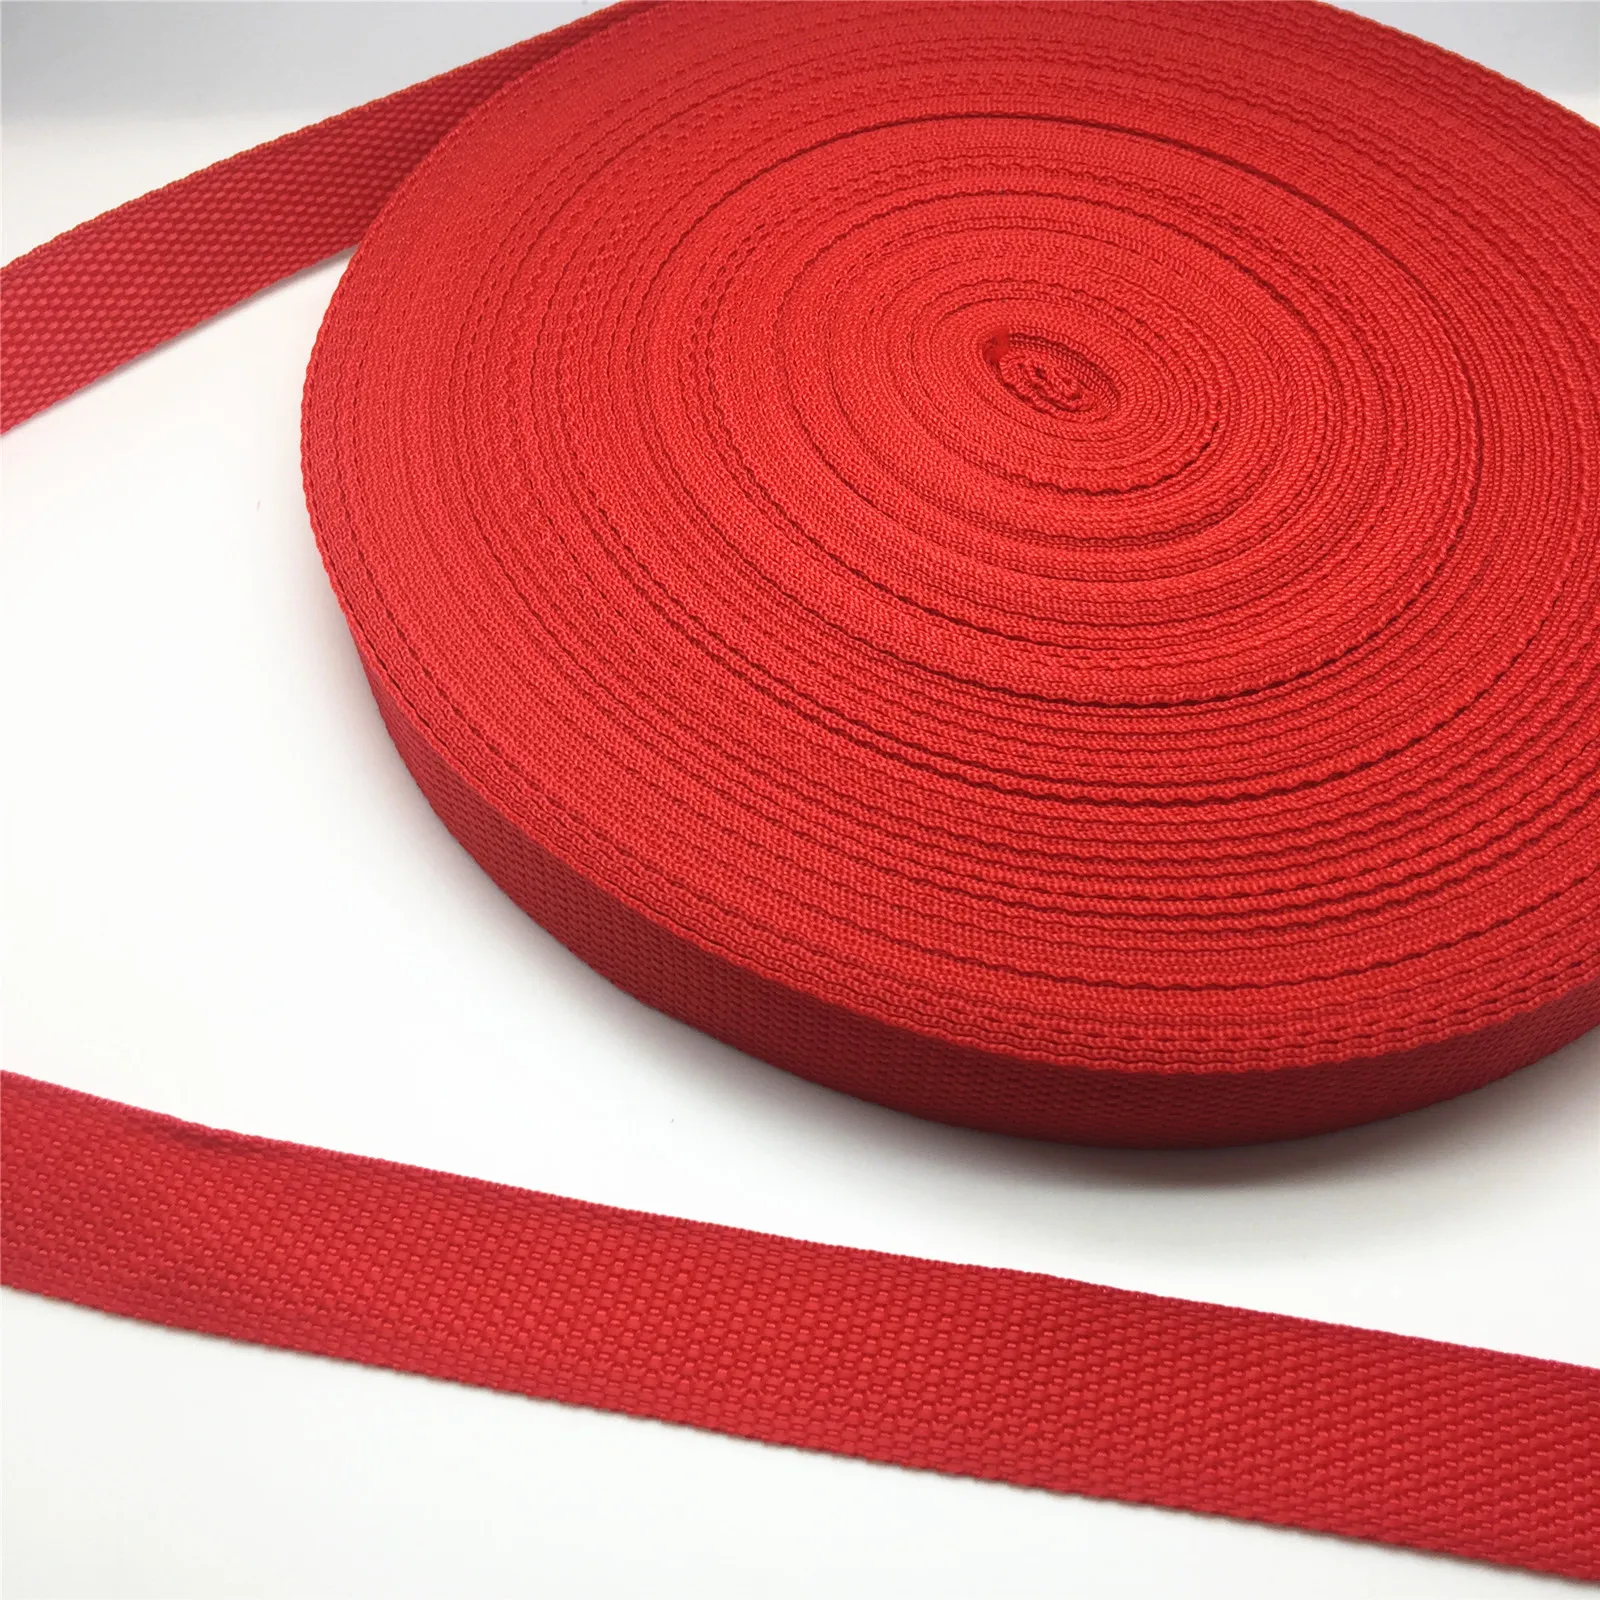 NEW 5Yards 25mm Wide Strap Nylon Webbing Knapsack Strapping Safety Belt DIY Pet Rope Sewing Crafts images - 6